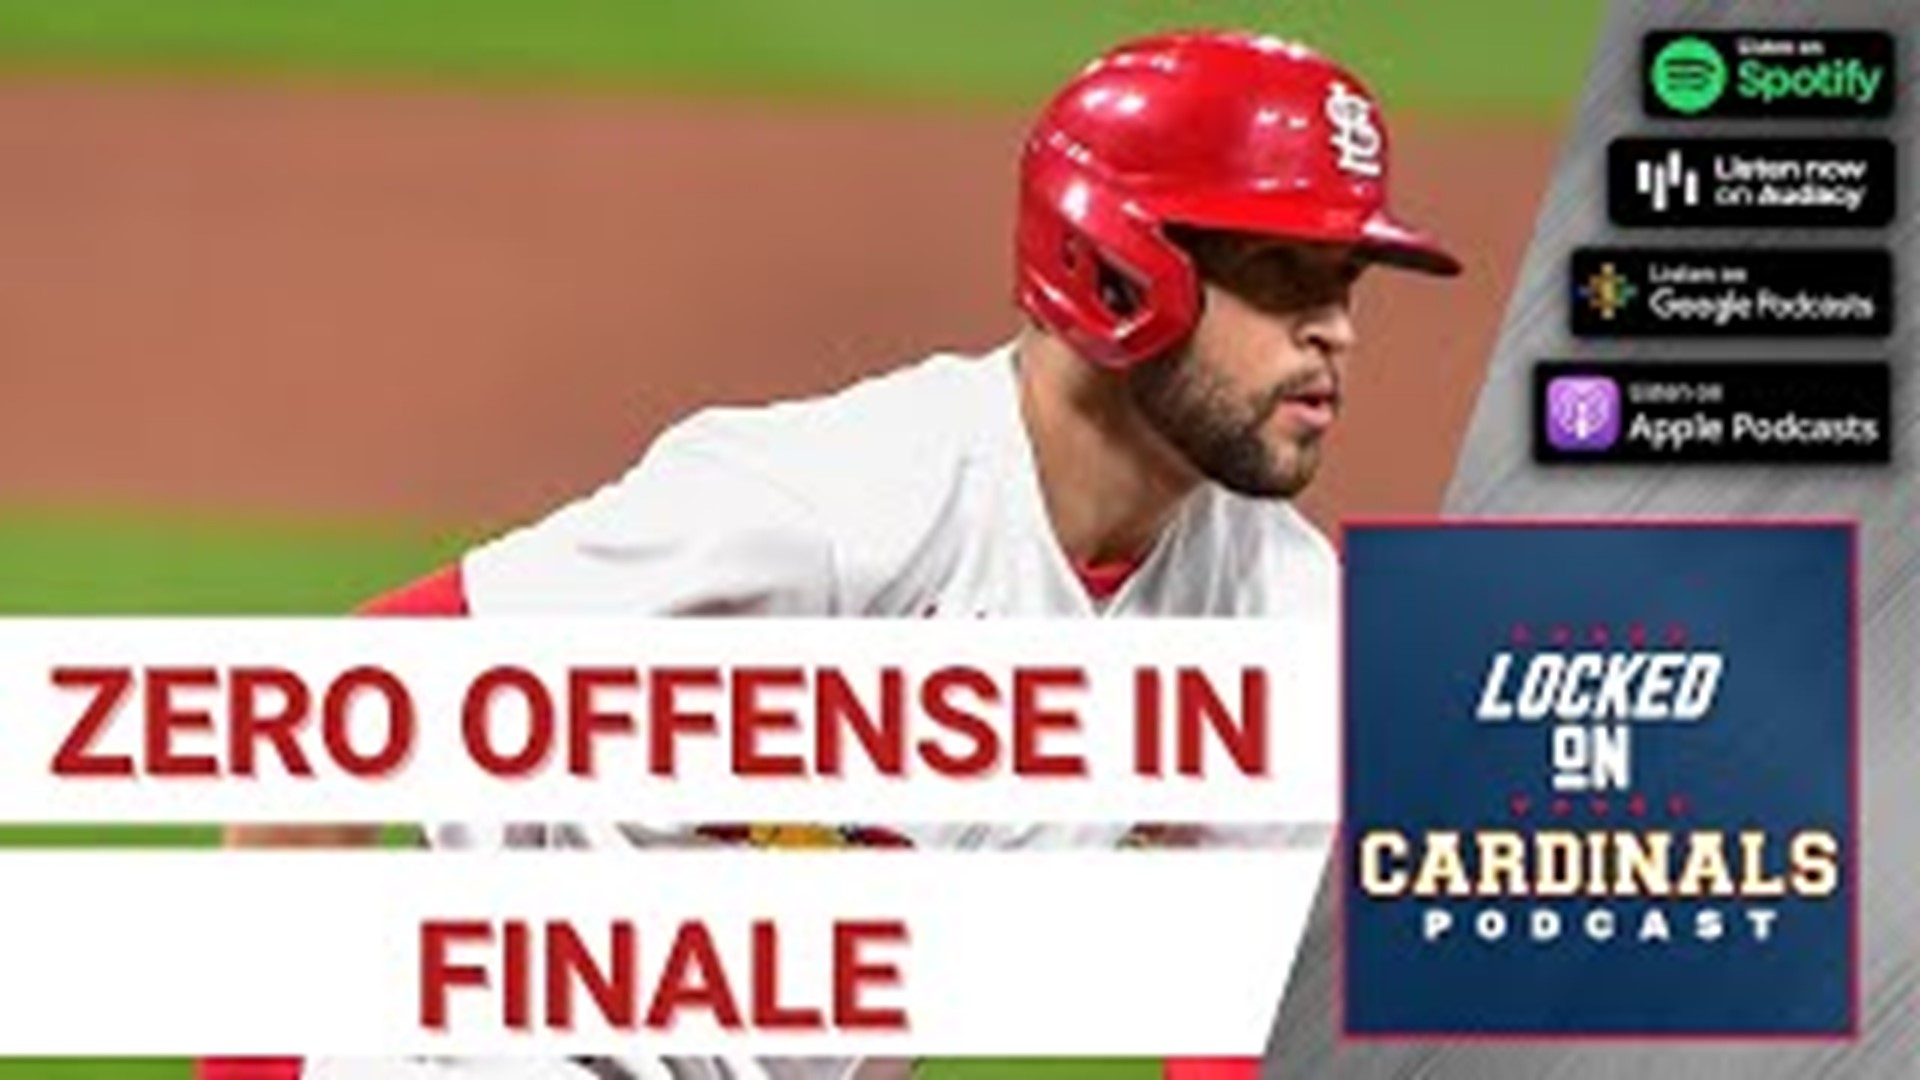 The St. Louis Cardinals were shutout in the finale against the LA Dodgers.